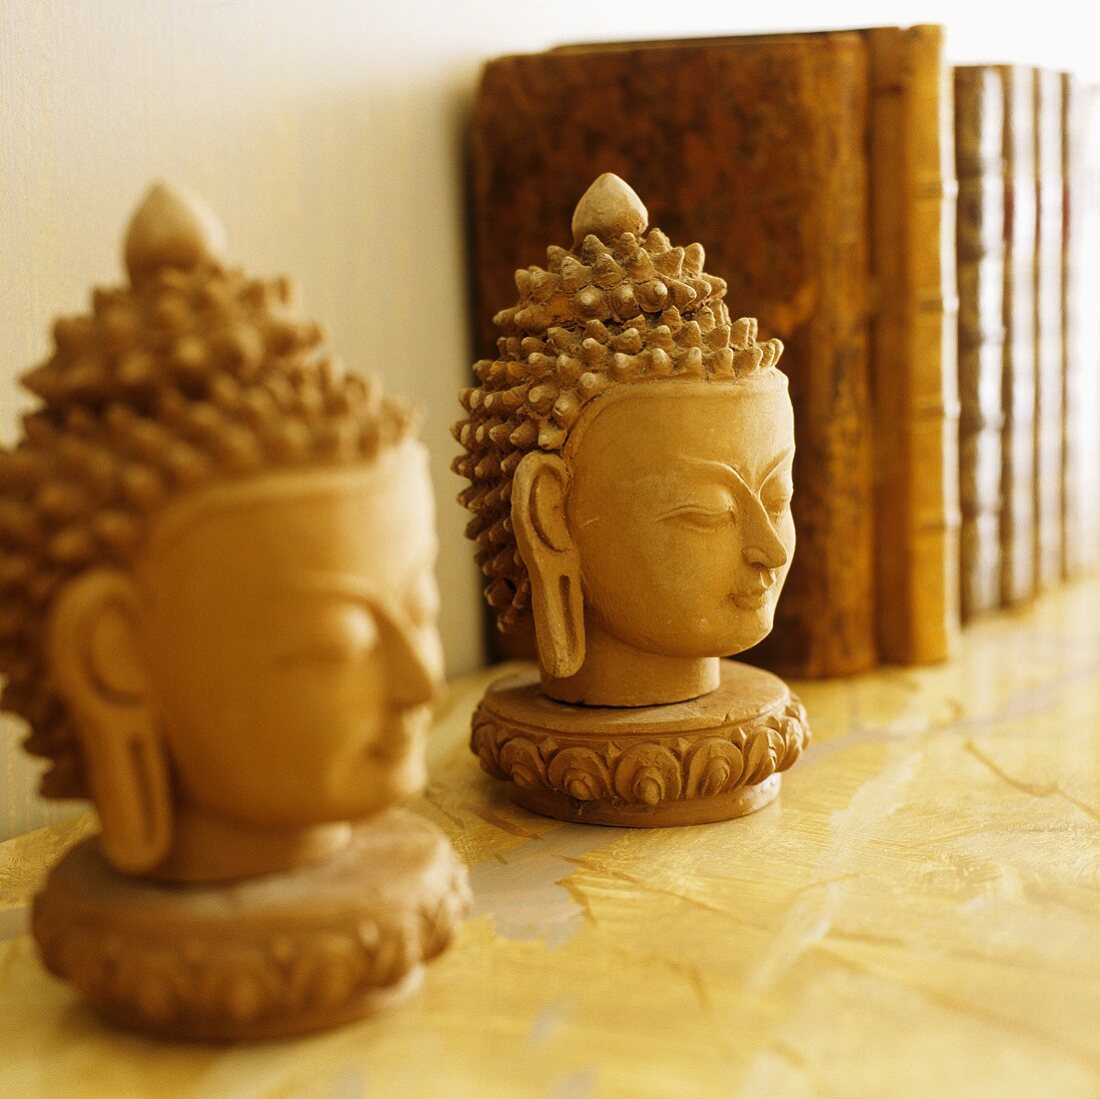 Oriental Buddha heads on a book shelf